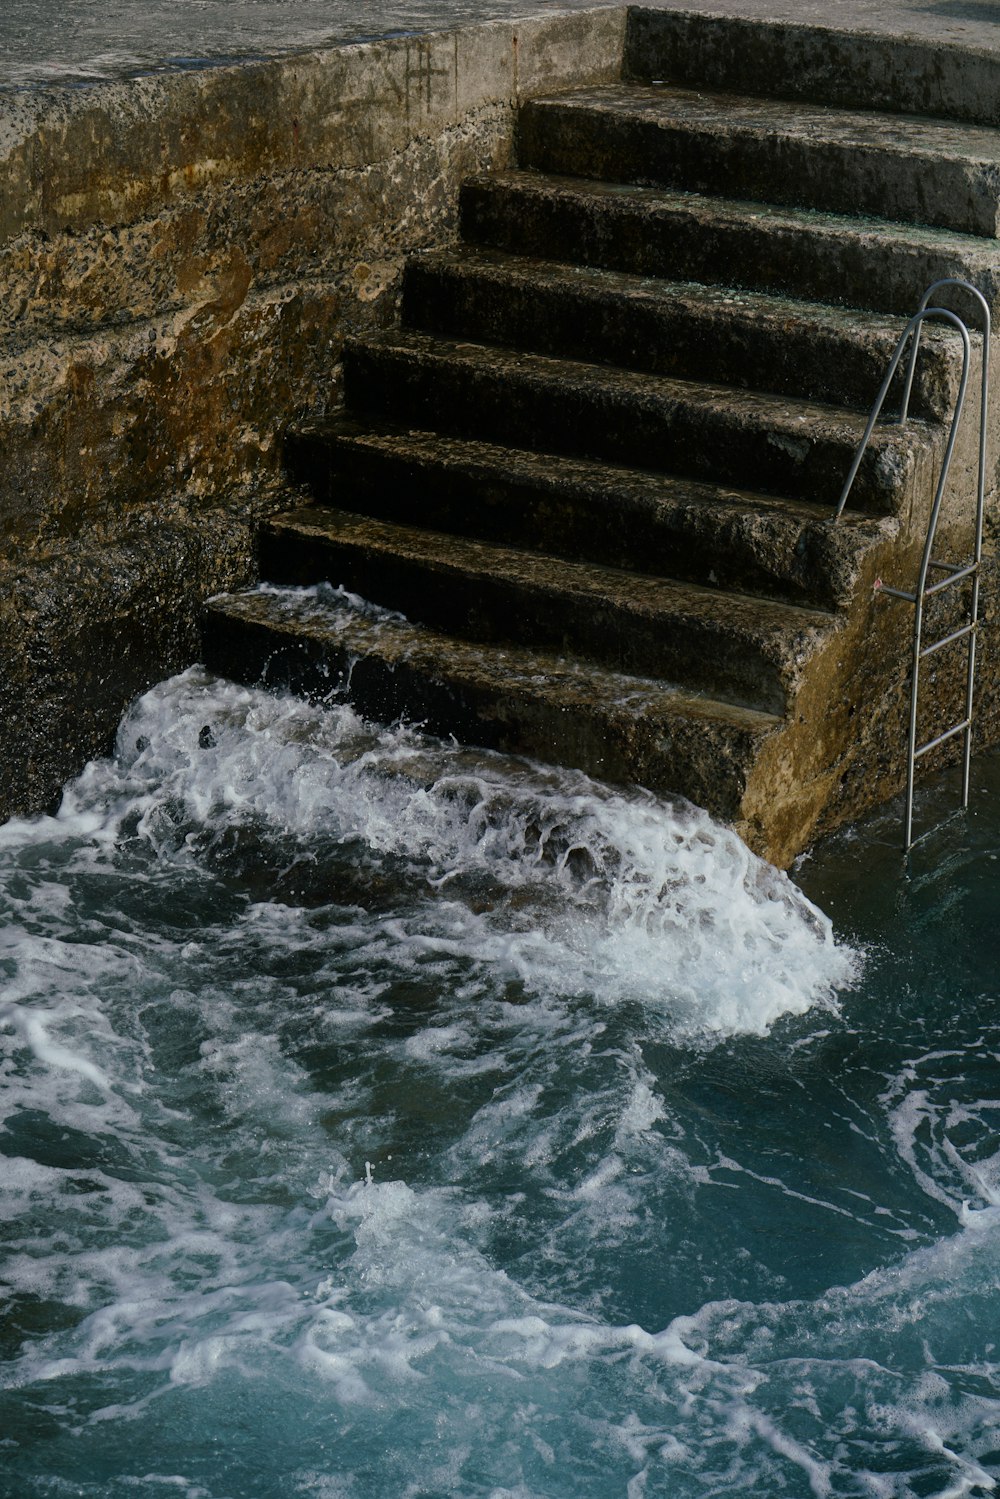 ondas de água batendo nas escadas de concreto